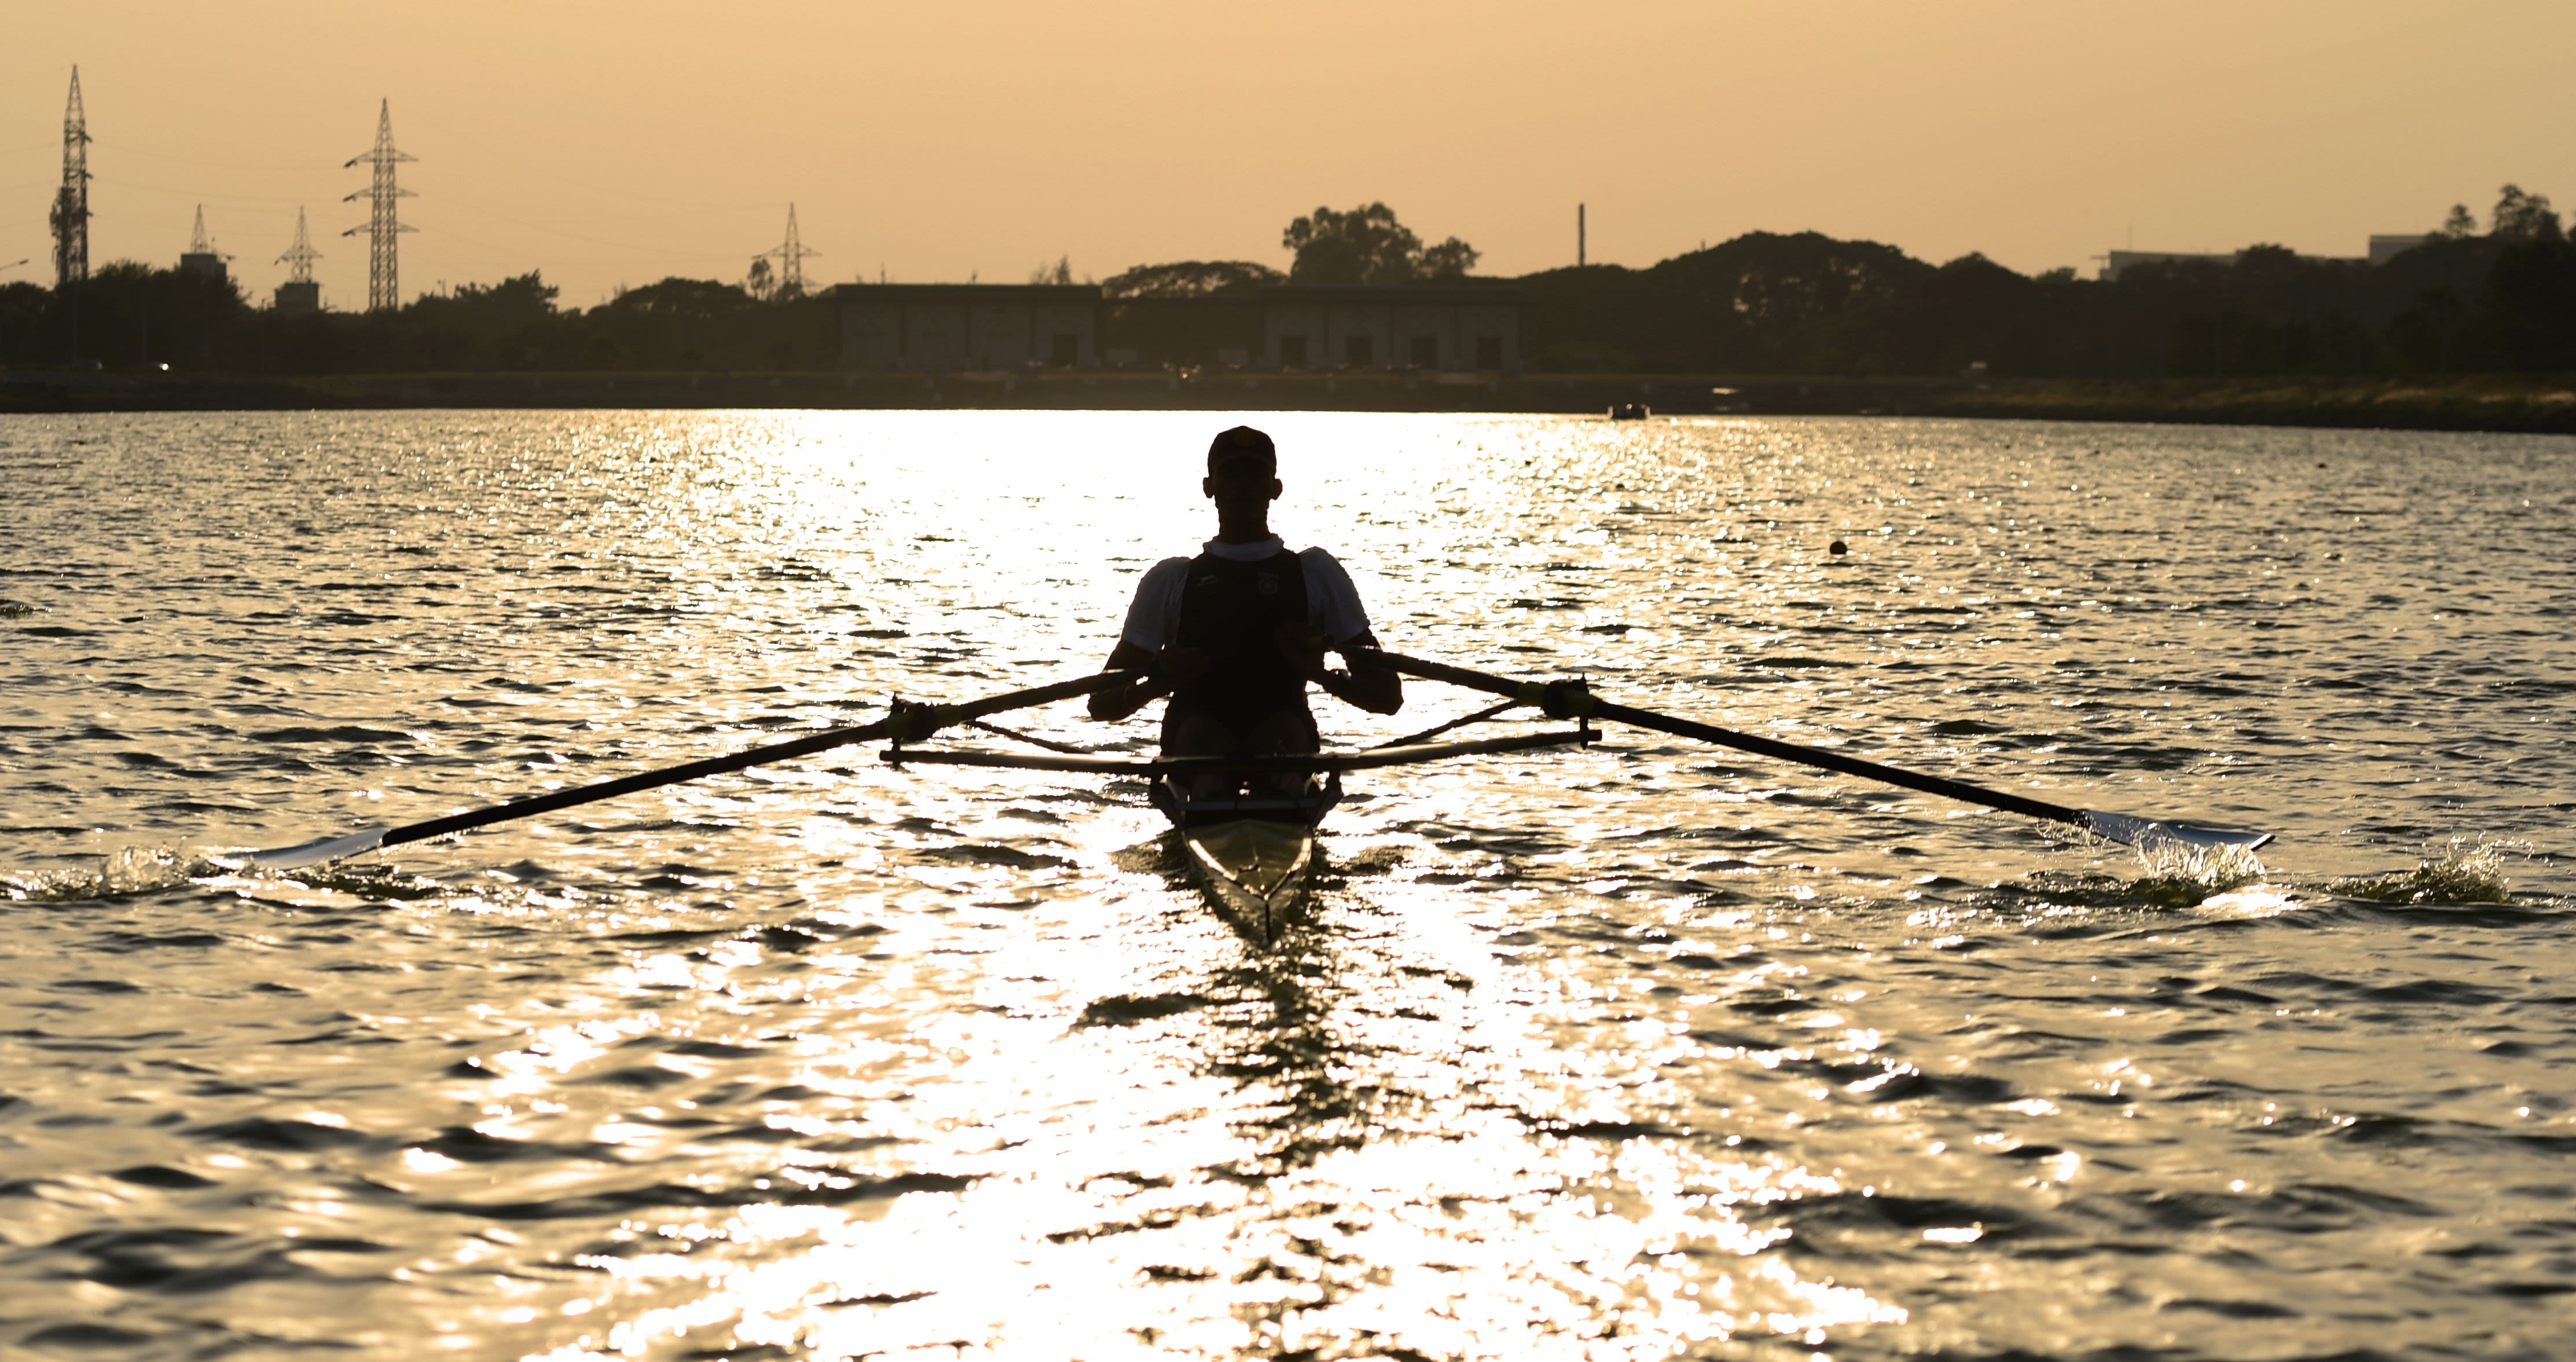 Dial Fiddle sunflower Olympics: Rowing from a drought-ridden Indian village to Rio De Janeiro |  CNN